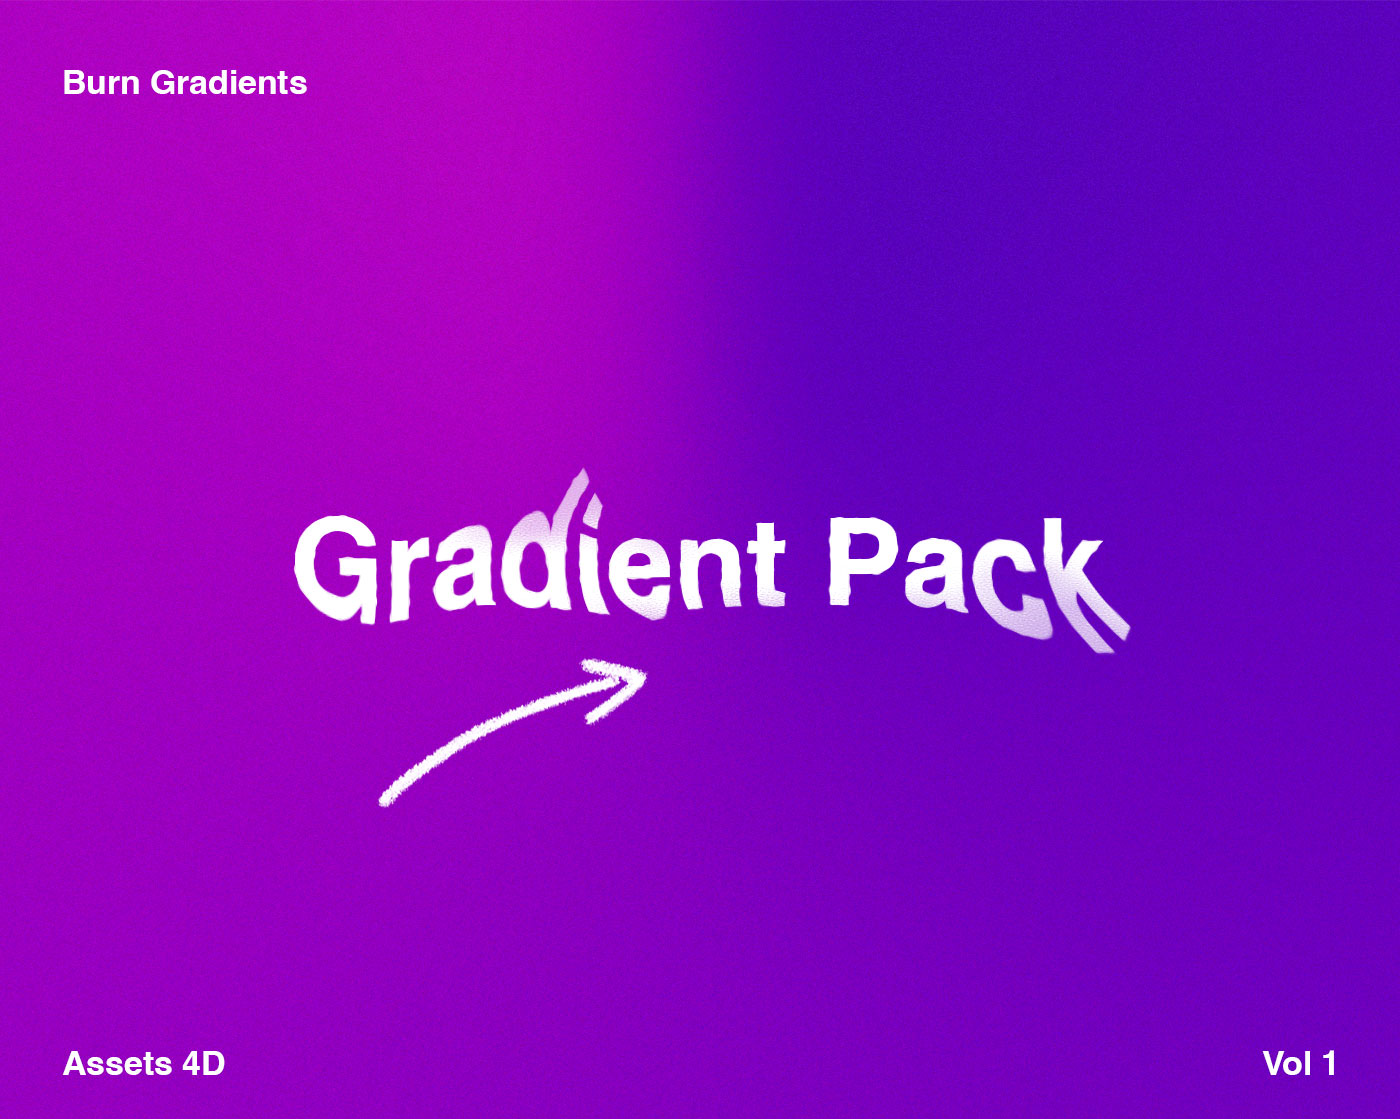 The Gradient Pack Vol 1